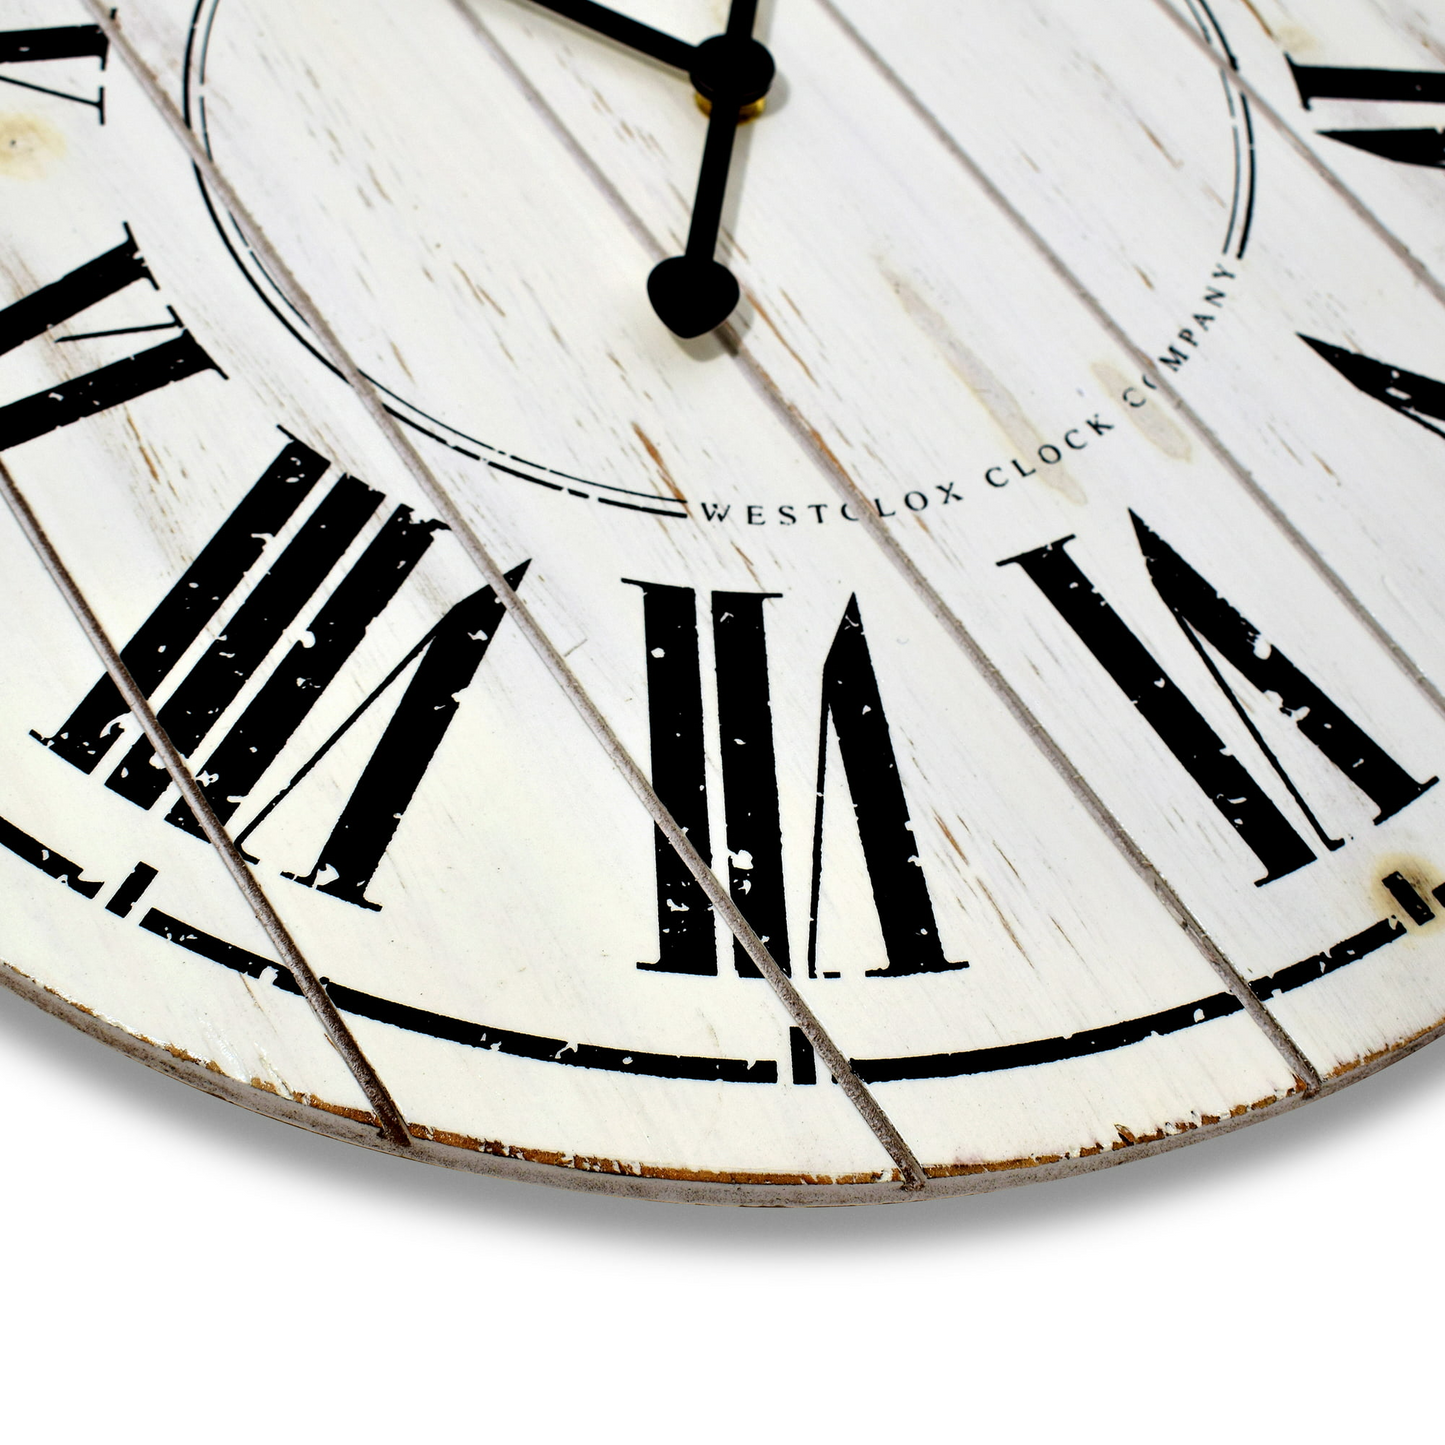 18" White Washed Wood Analog QA Wall Clock with Distressed Finish